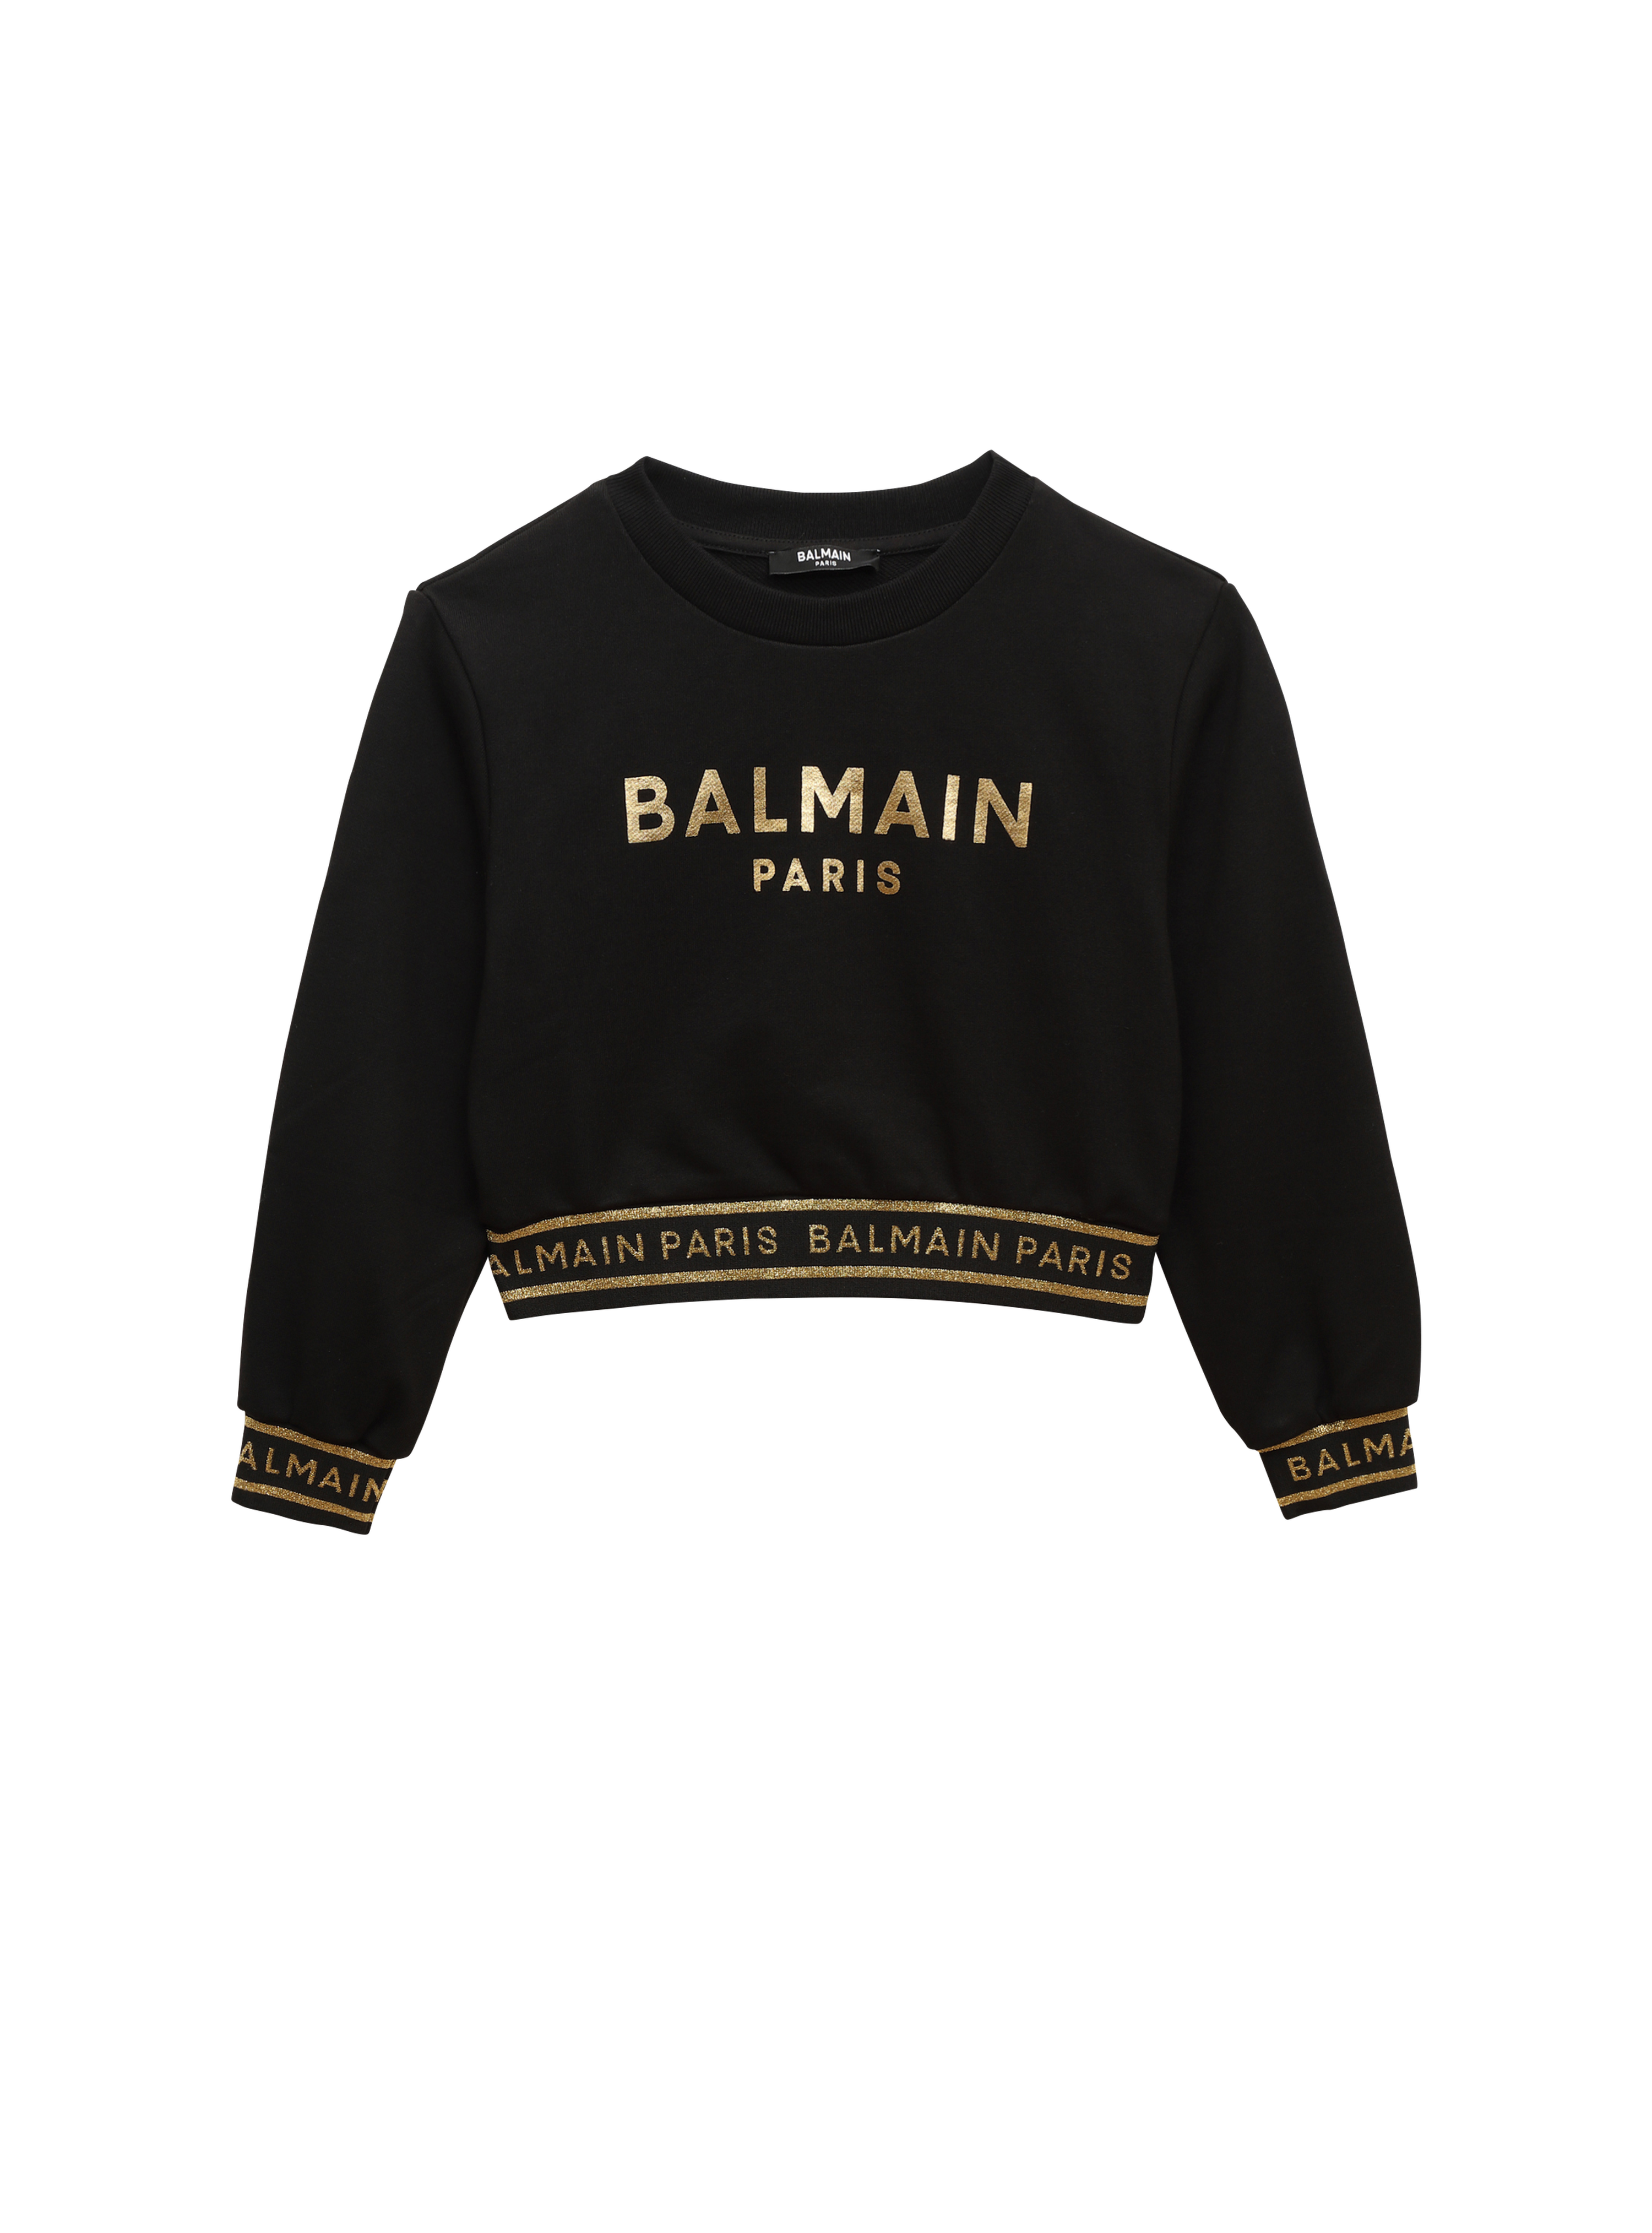 Cotton Balmain logo sweatshirt, black